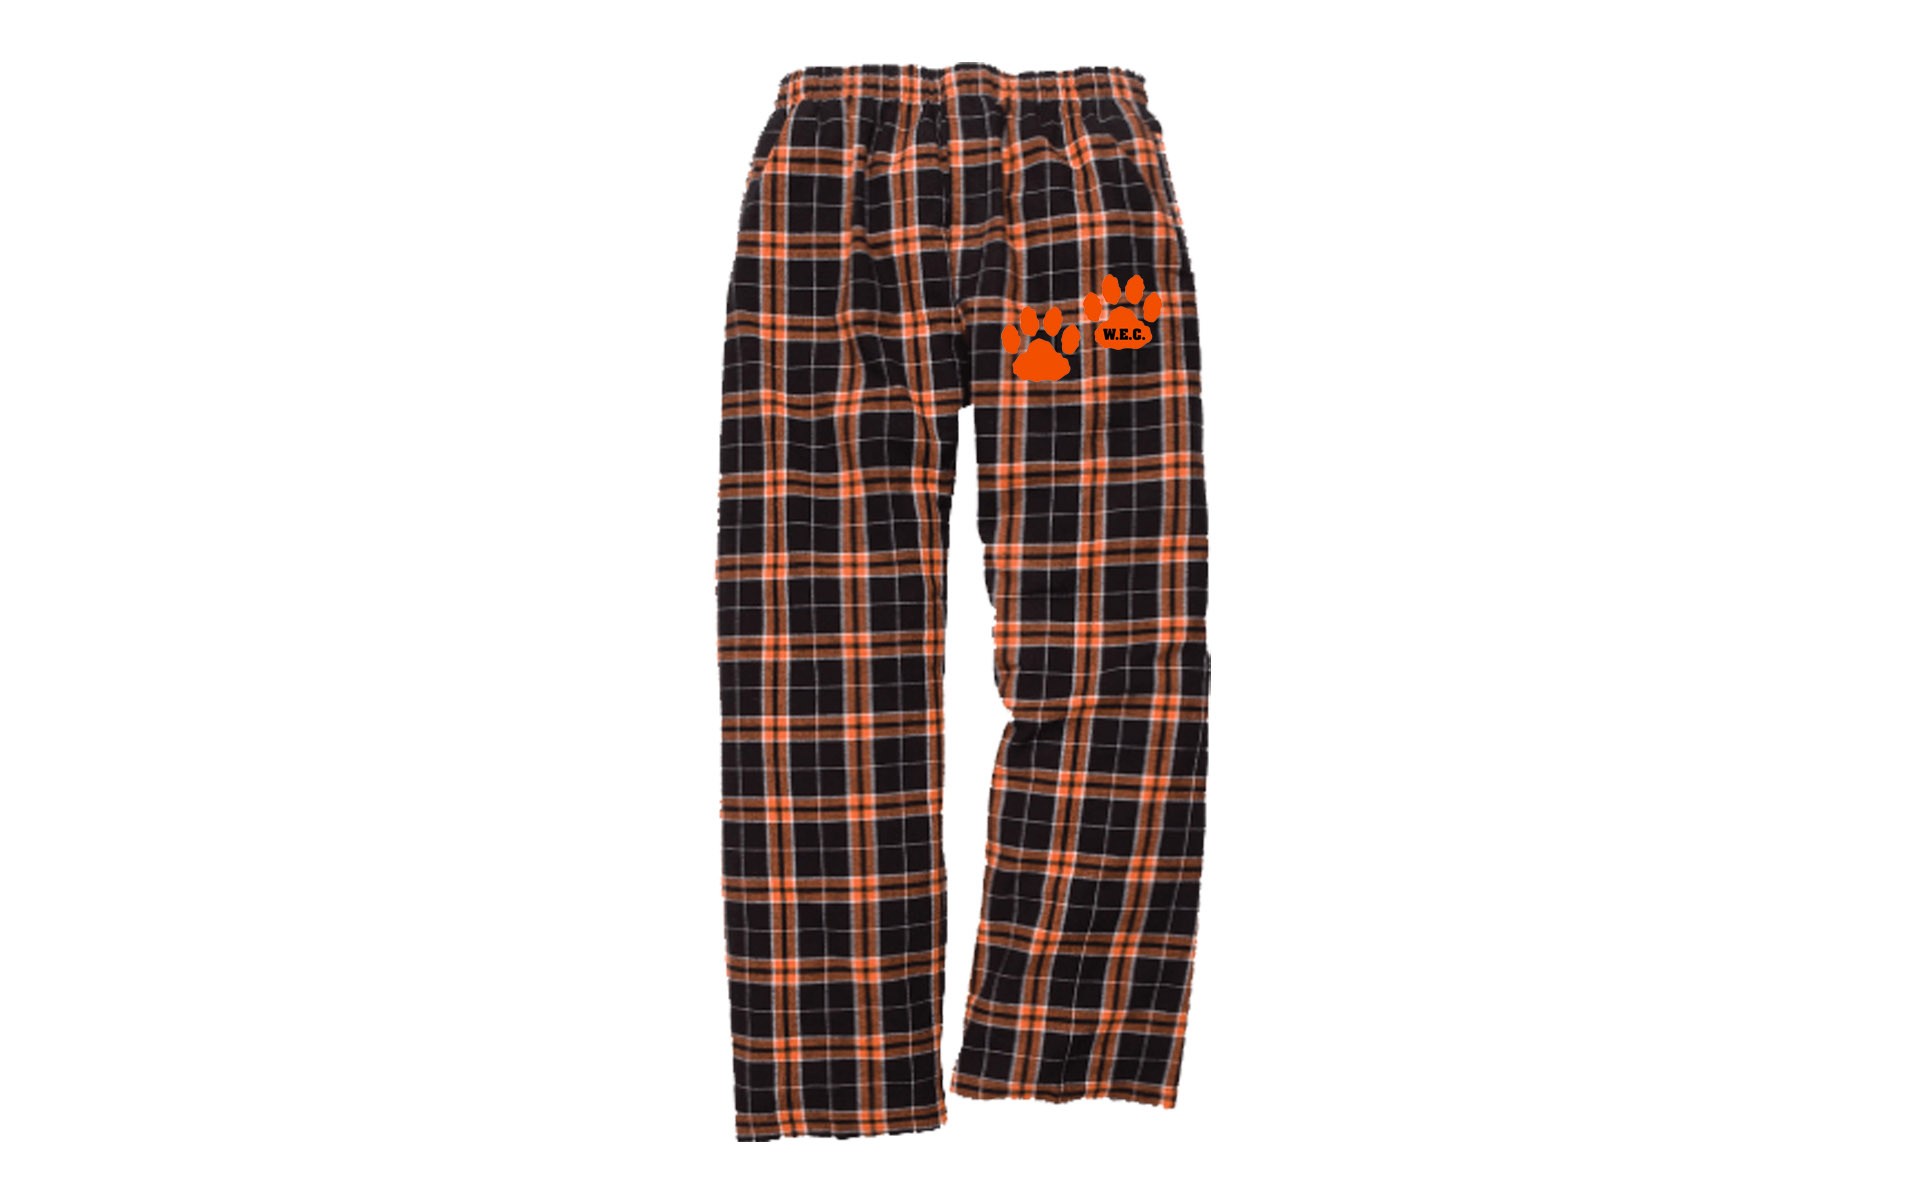 W.E.C. Spirit Black & Orange Pajama Pants w/ 2 Paw Logo* - Please Allow 2-3 Weeks for Delivery